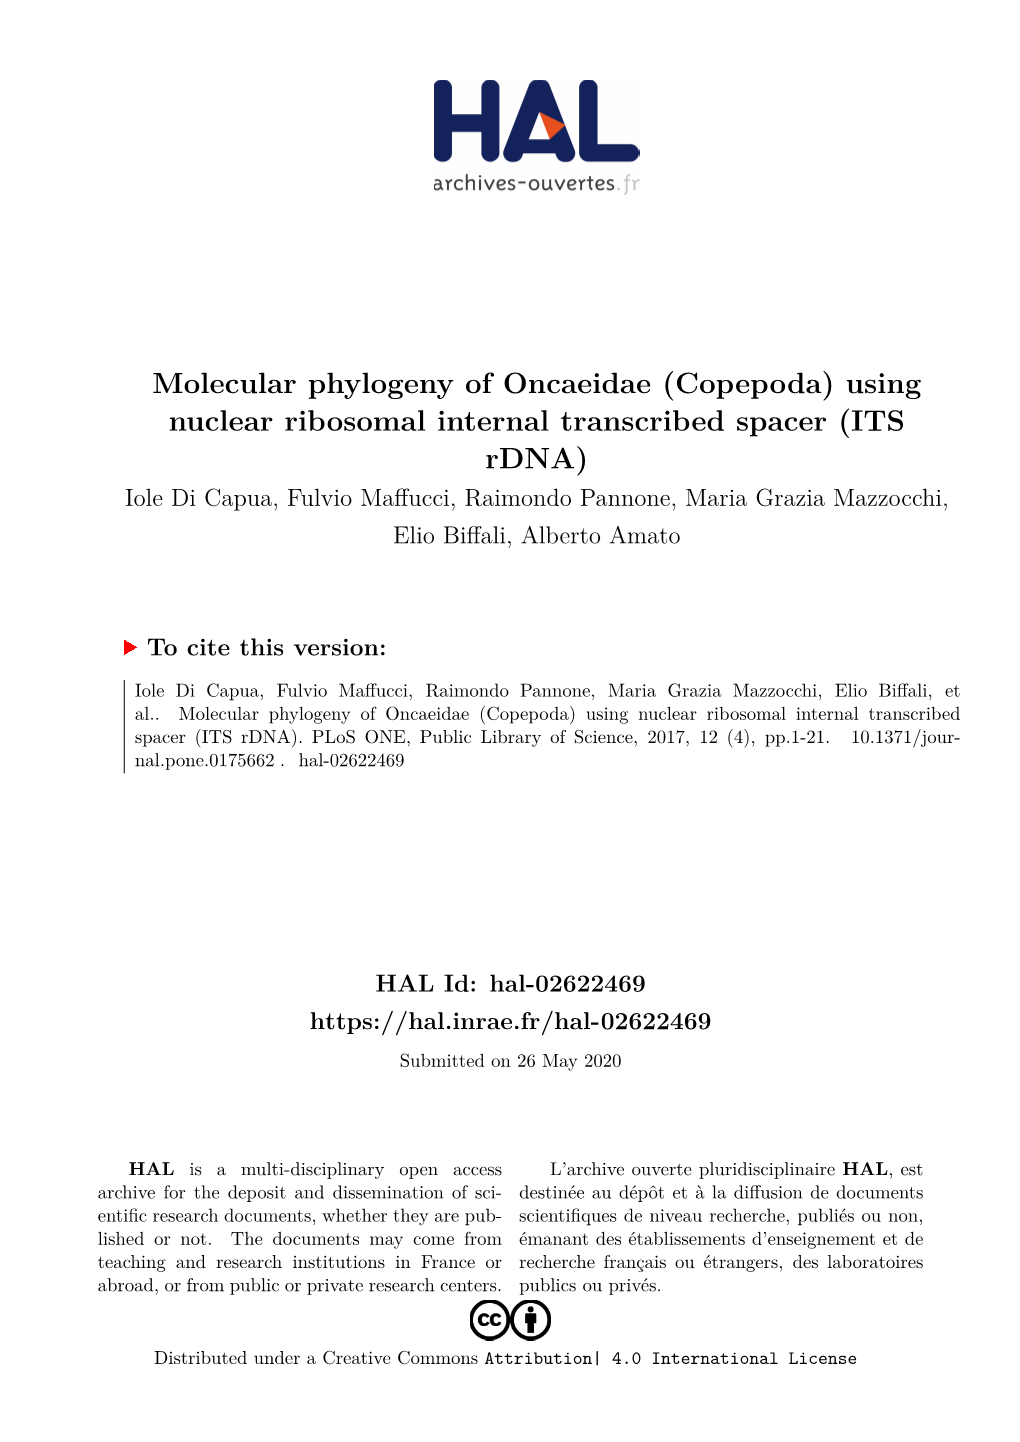 Molecular Phylogeny of Oncaeidae (Copepoda) Using Nuclear